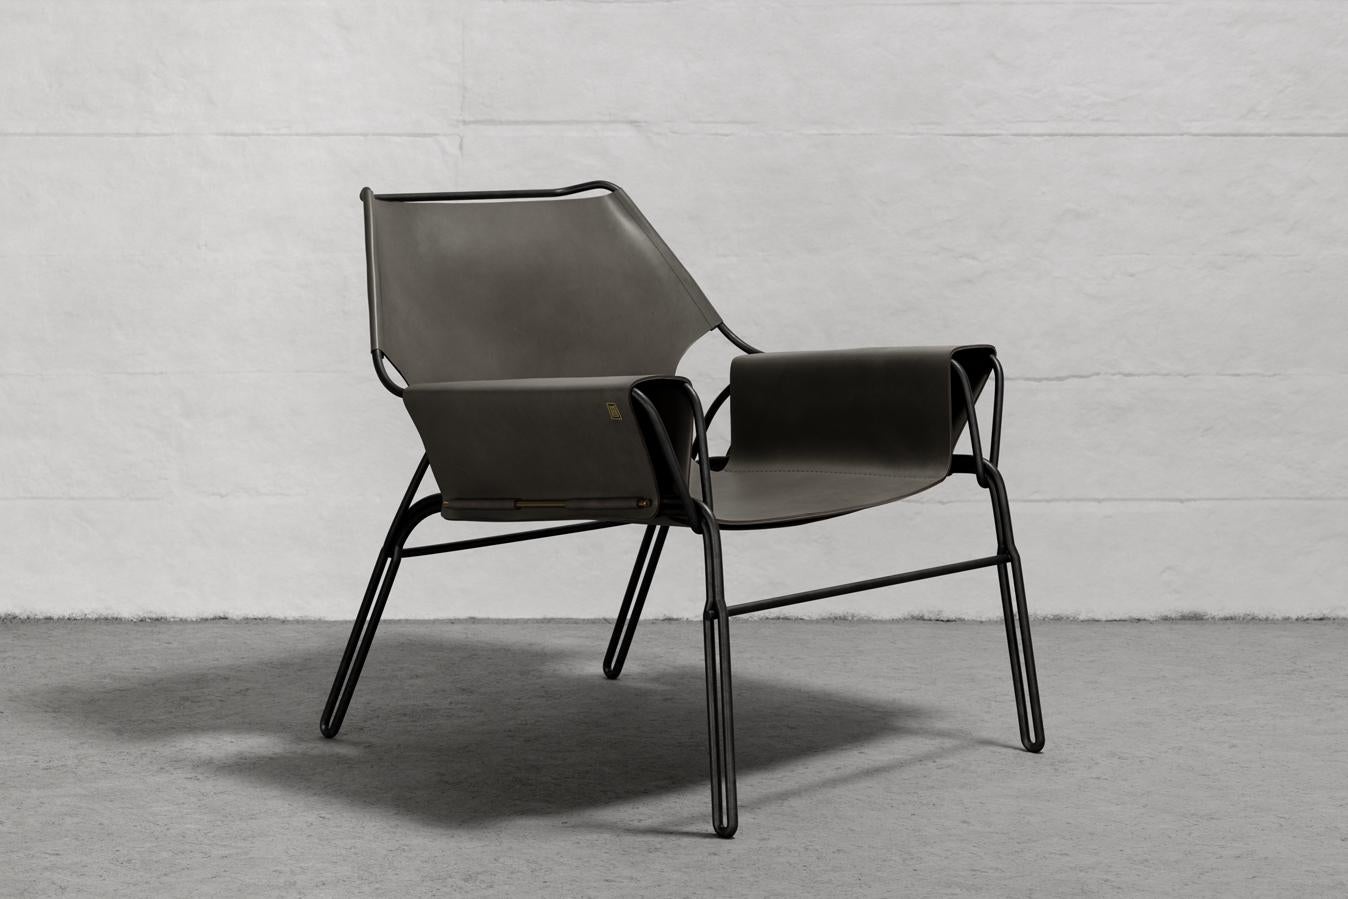 Perfidia_02 Lounge Chair Olivo by ALEJANDRO MOYANO

L 30.5